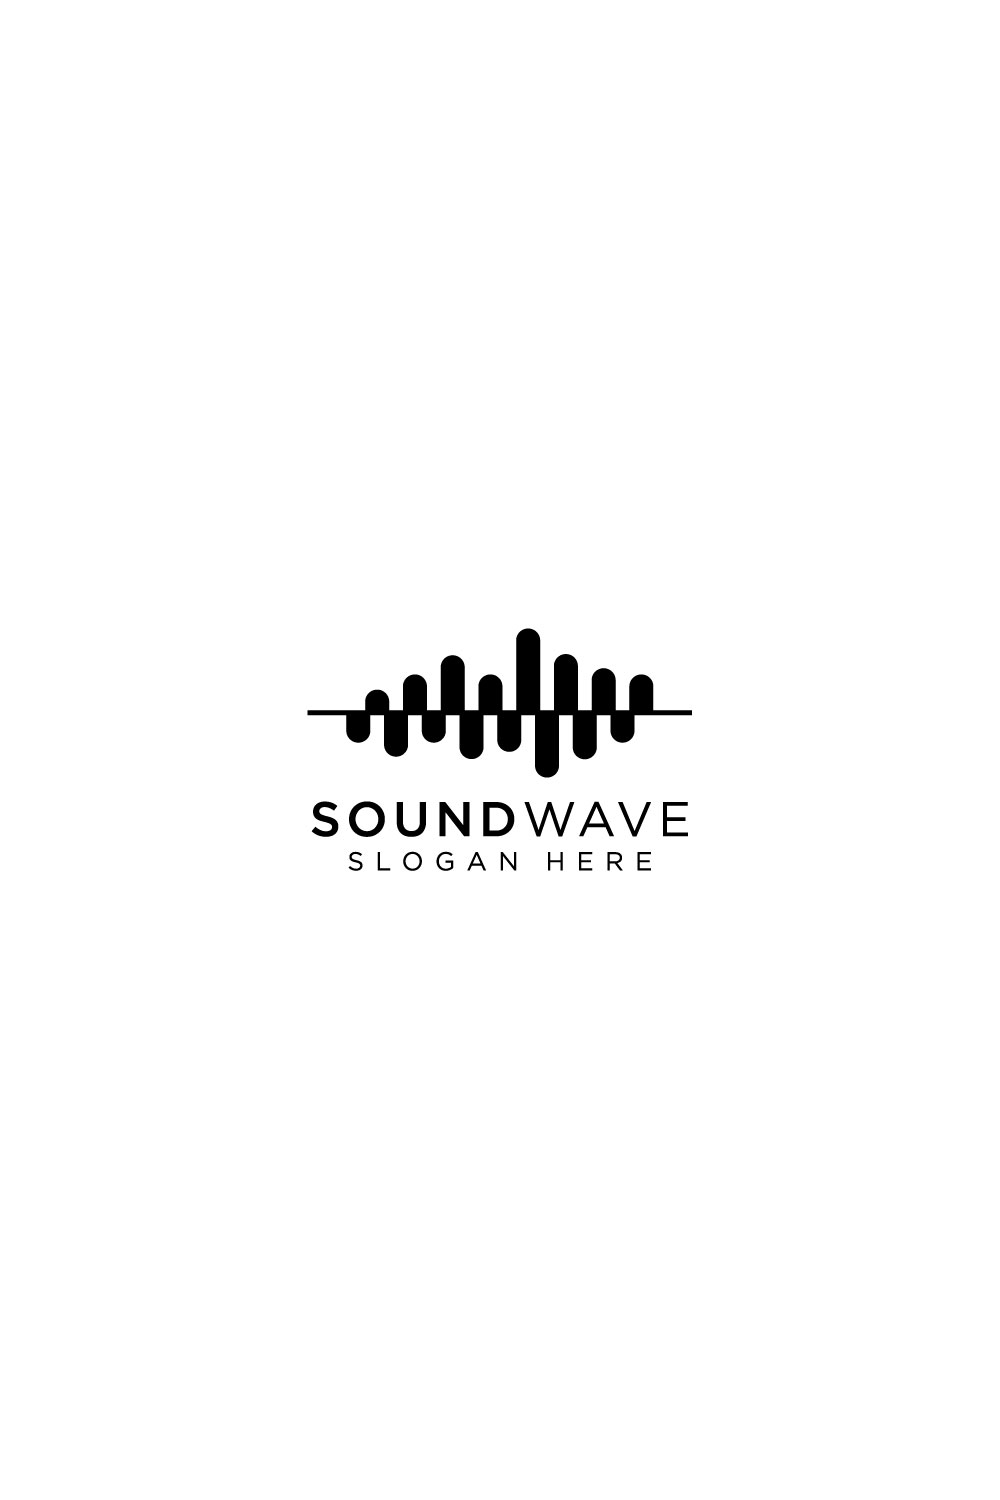 sound wave logo design vector pinterest preview image.